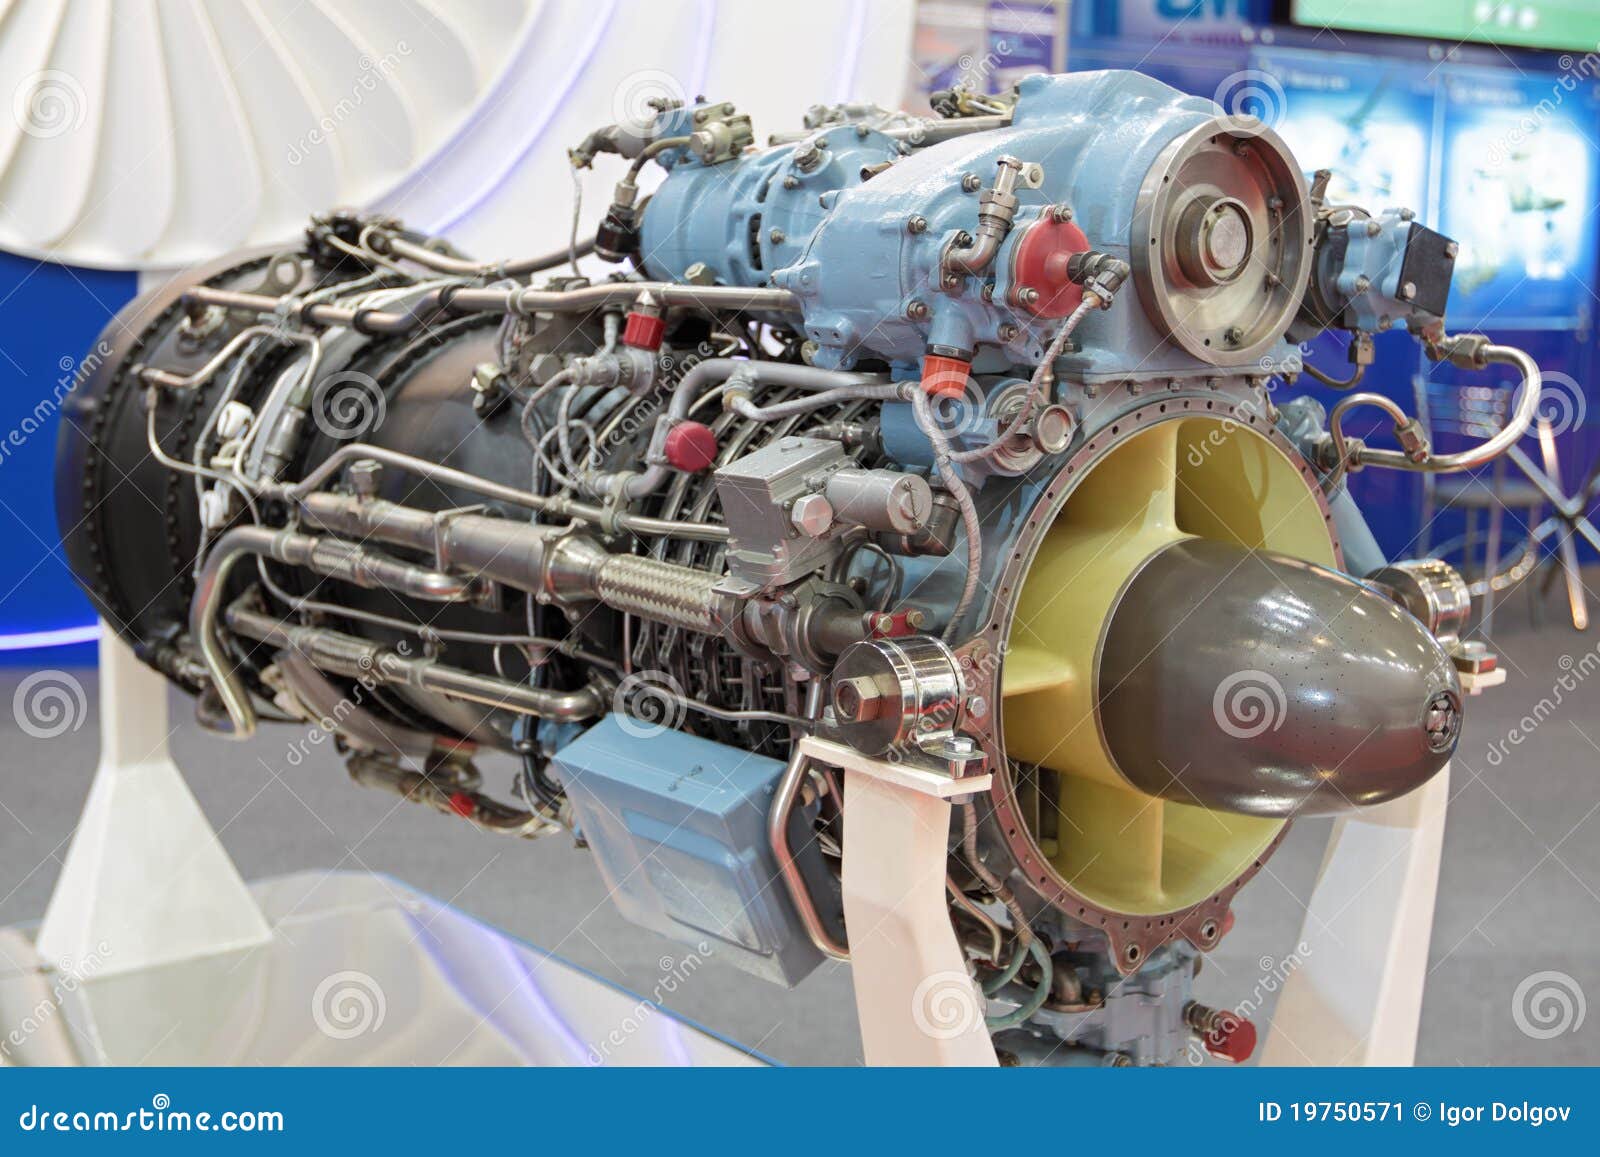 103 Turboshaft Engine Stock Photos - Free & Royalty-Free Stock Photos from  Dreamstime